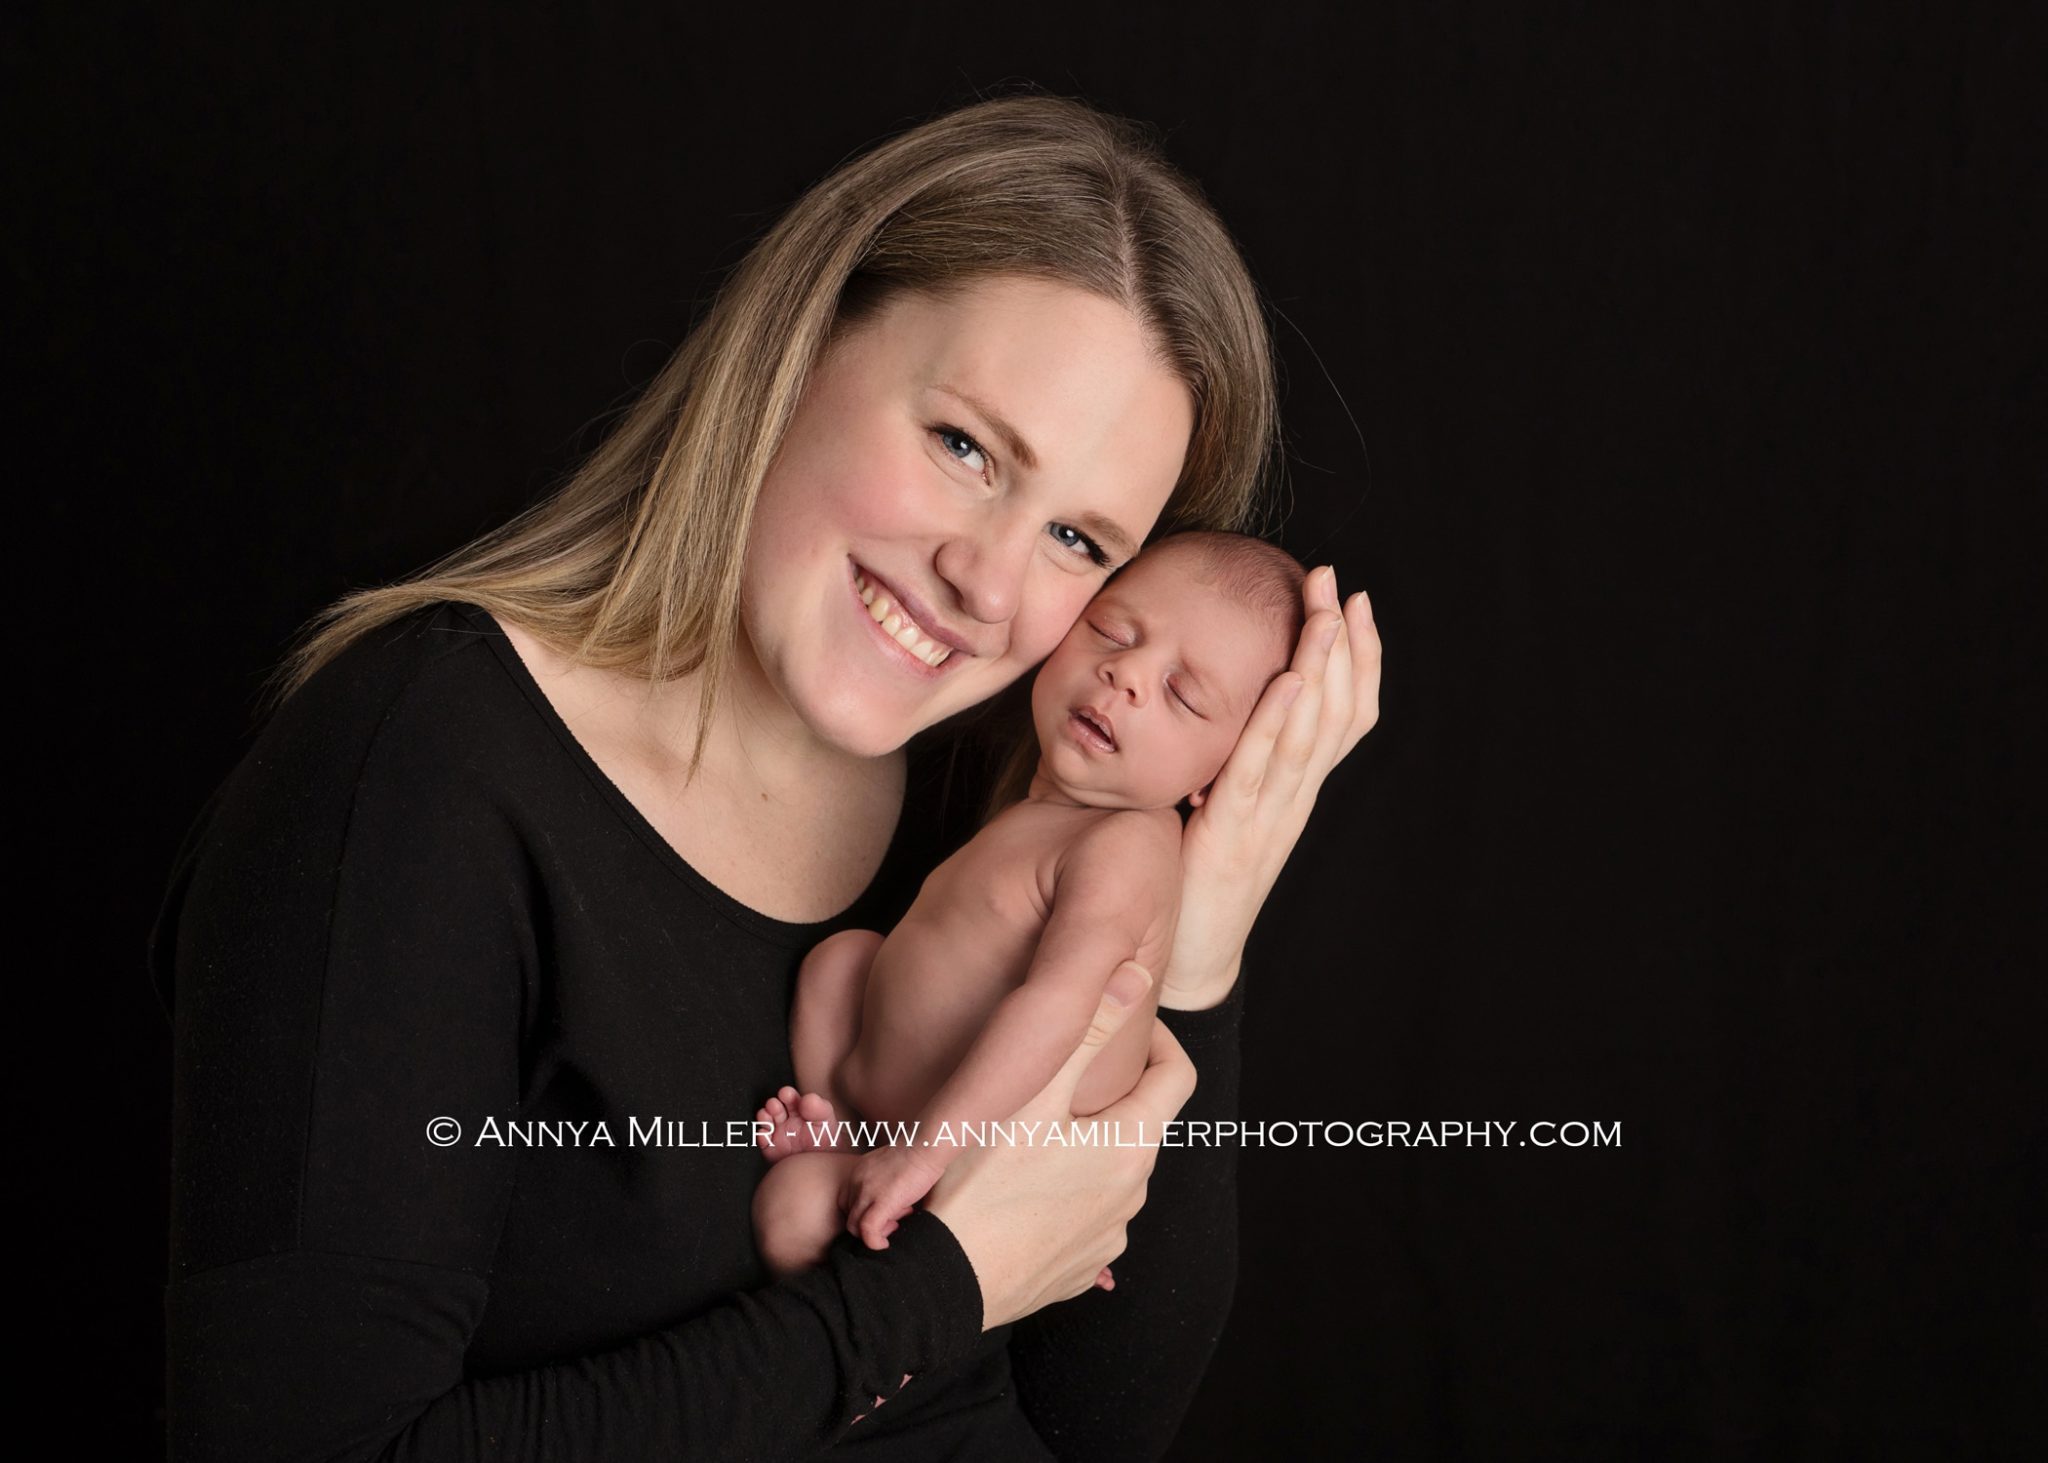 Baby portrait by local newborn photographer Annya Miller 